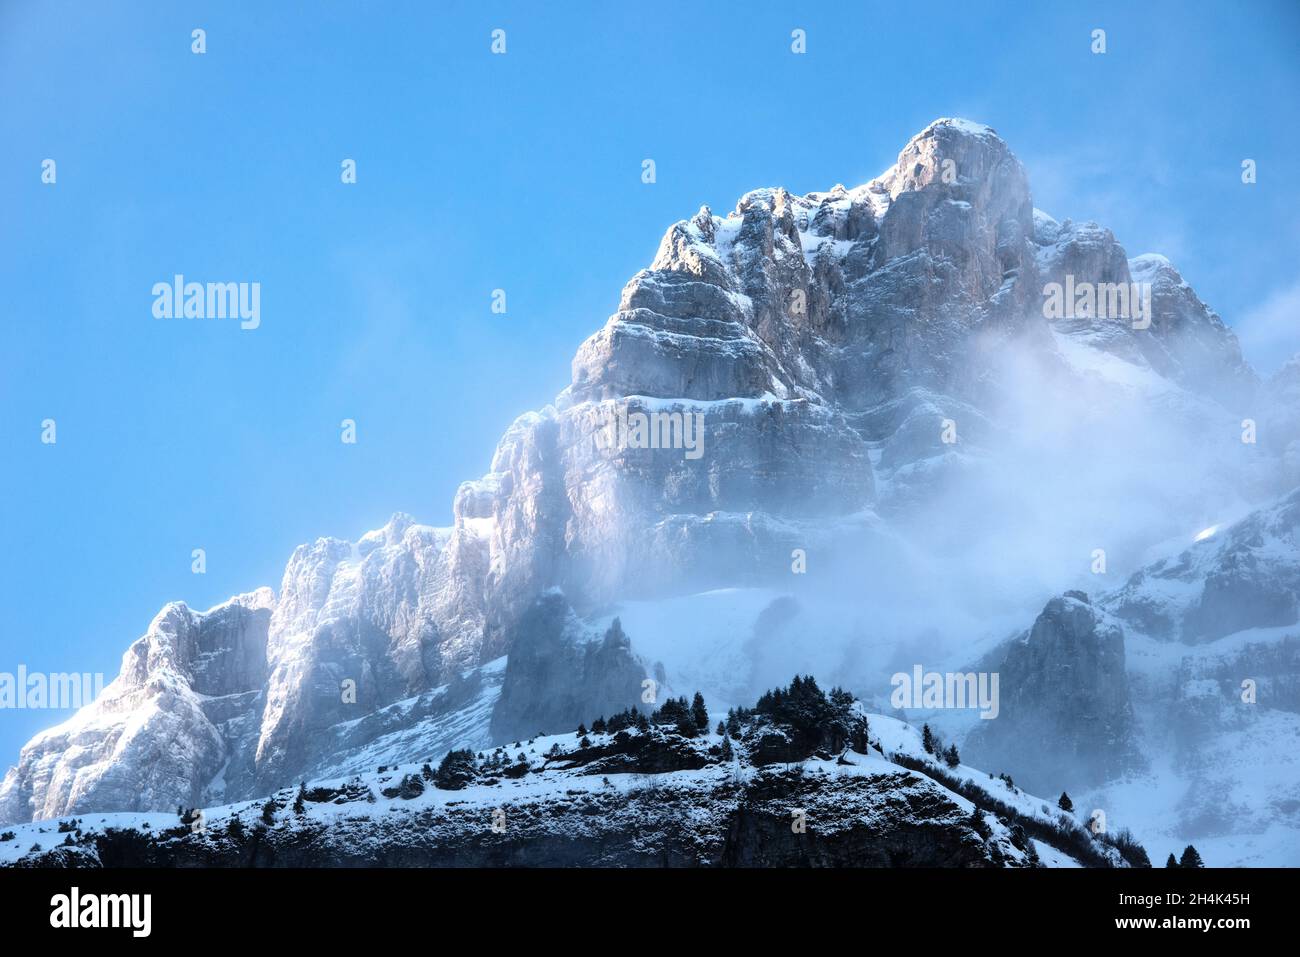 Snowcapped mountain peak covered in mist, Klausen, Switzerland Stock Photo